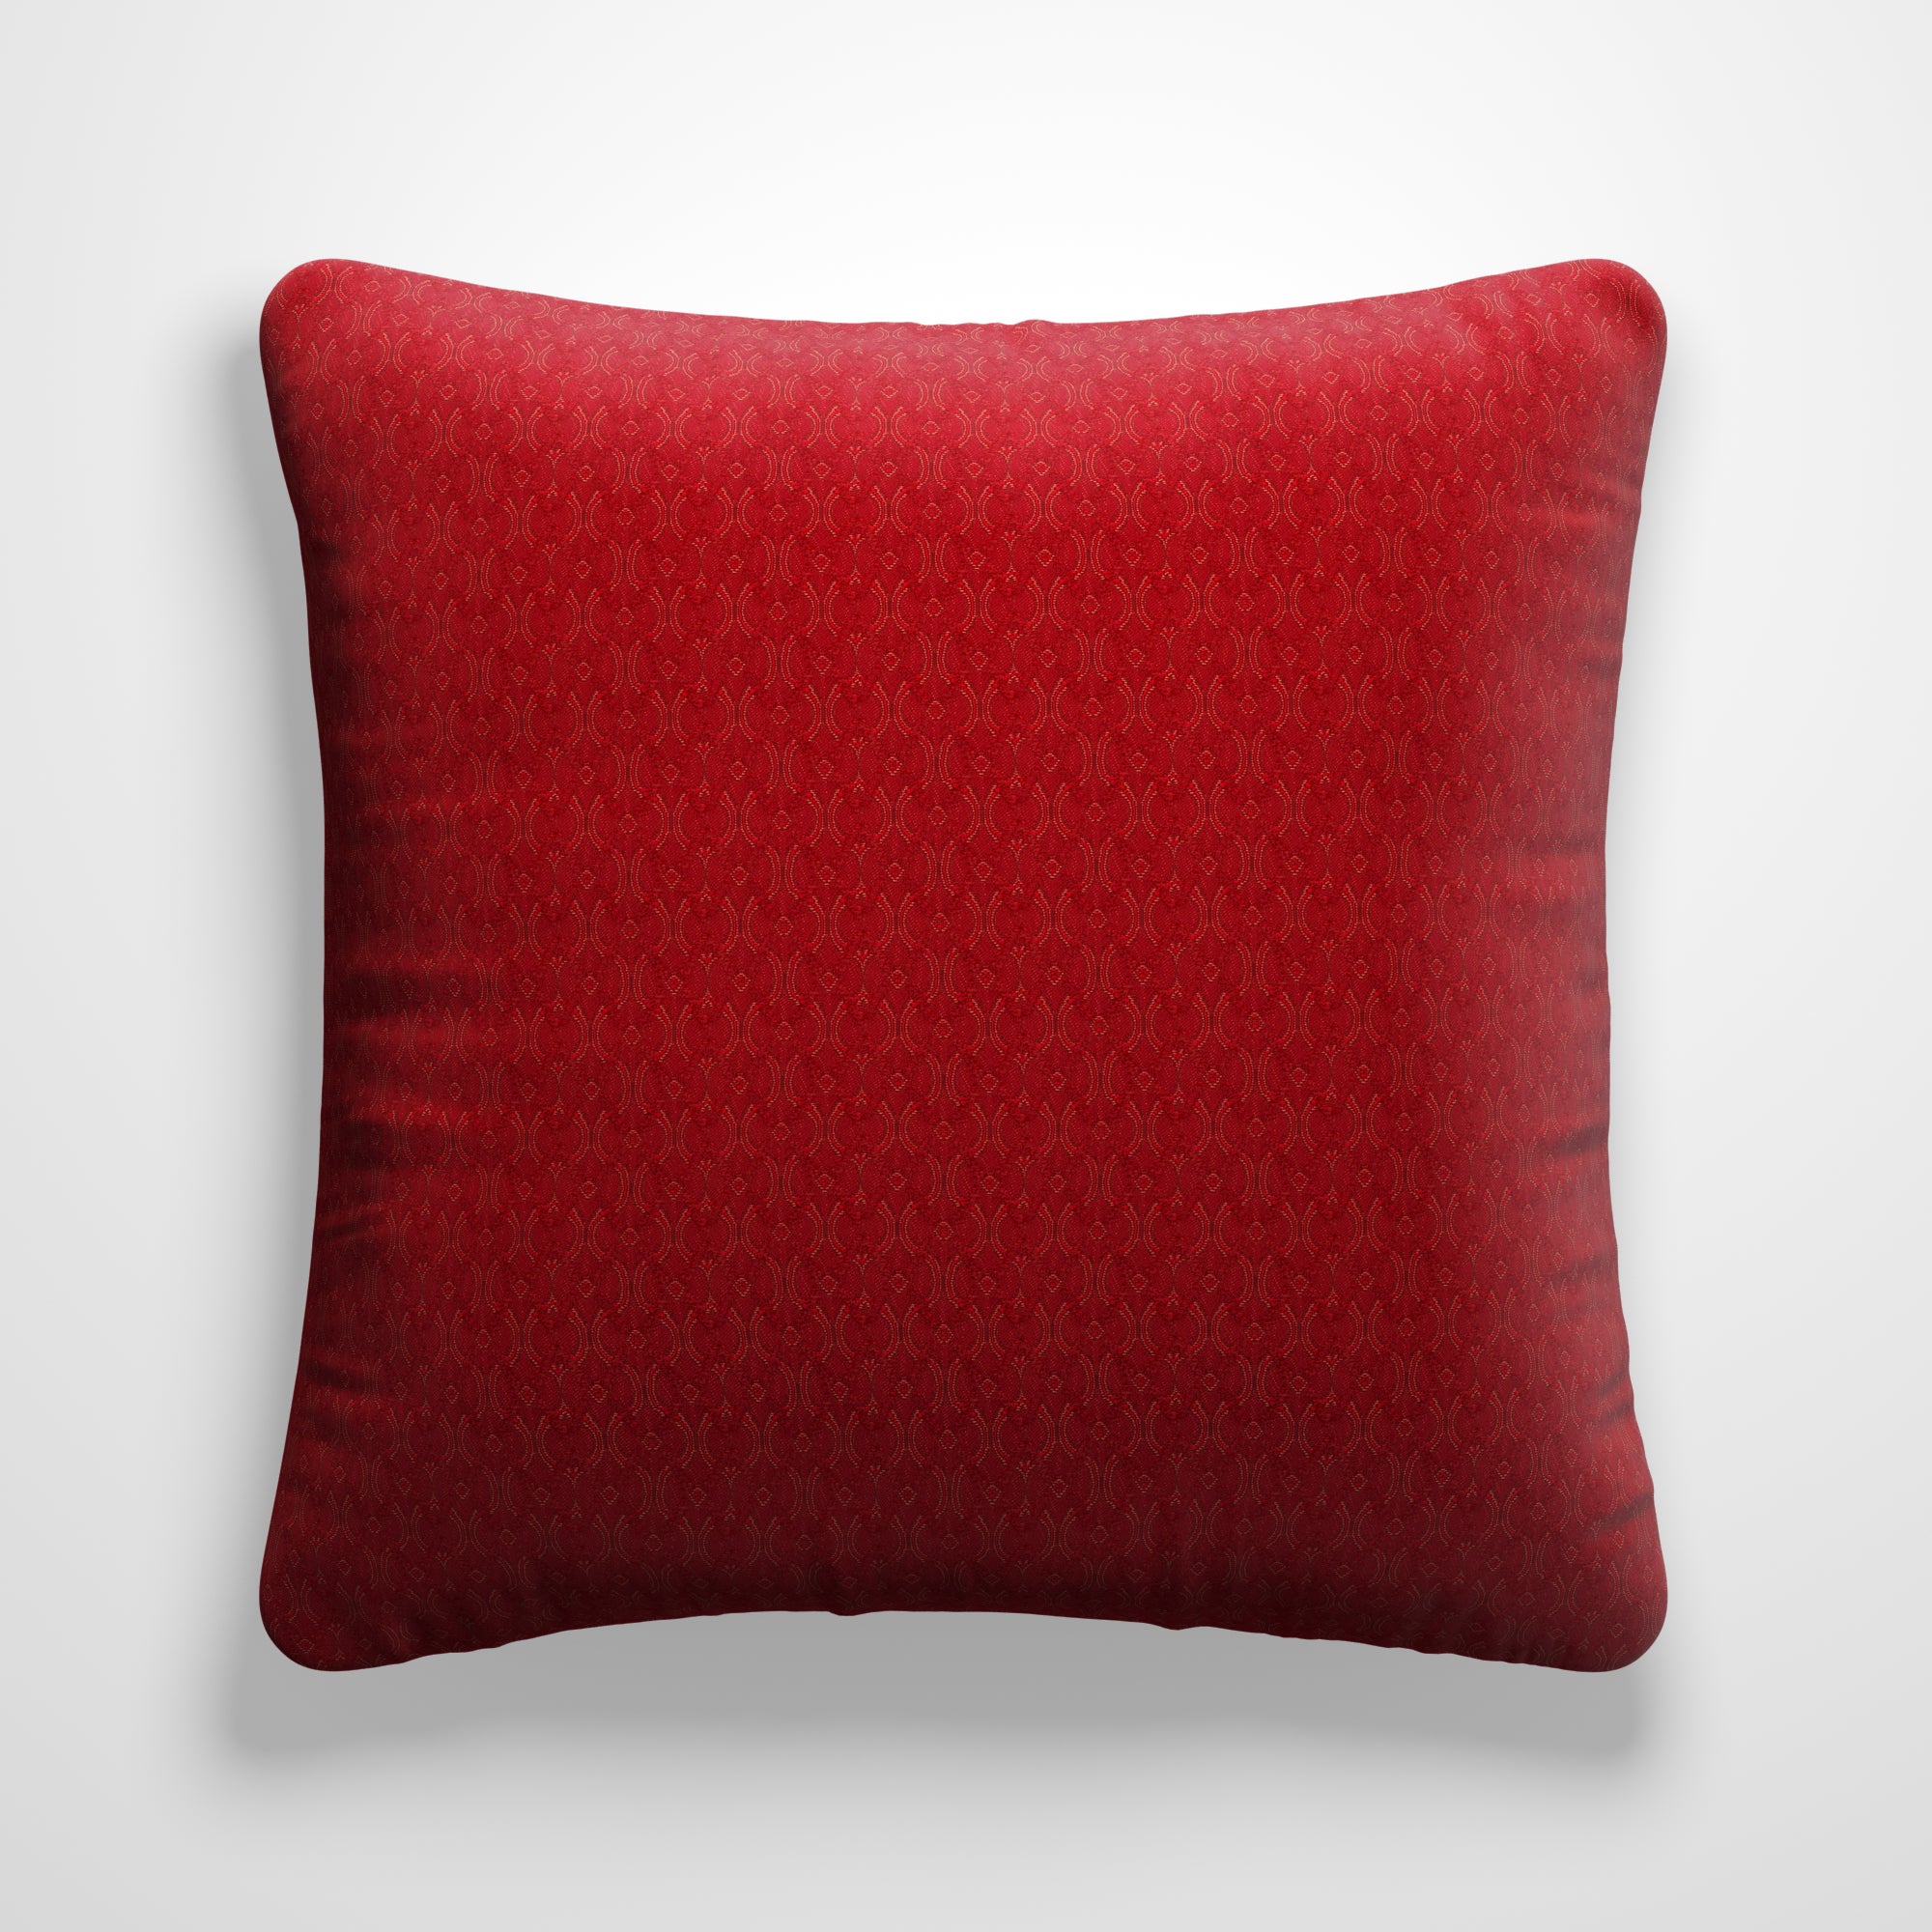 Soho Made to Order Cushion Cover Soho Chenille Red